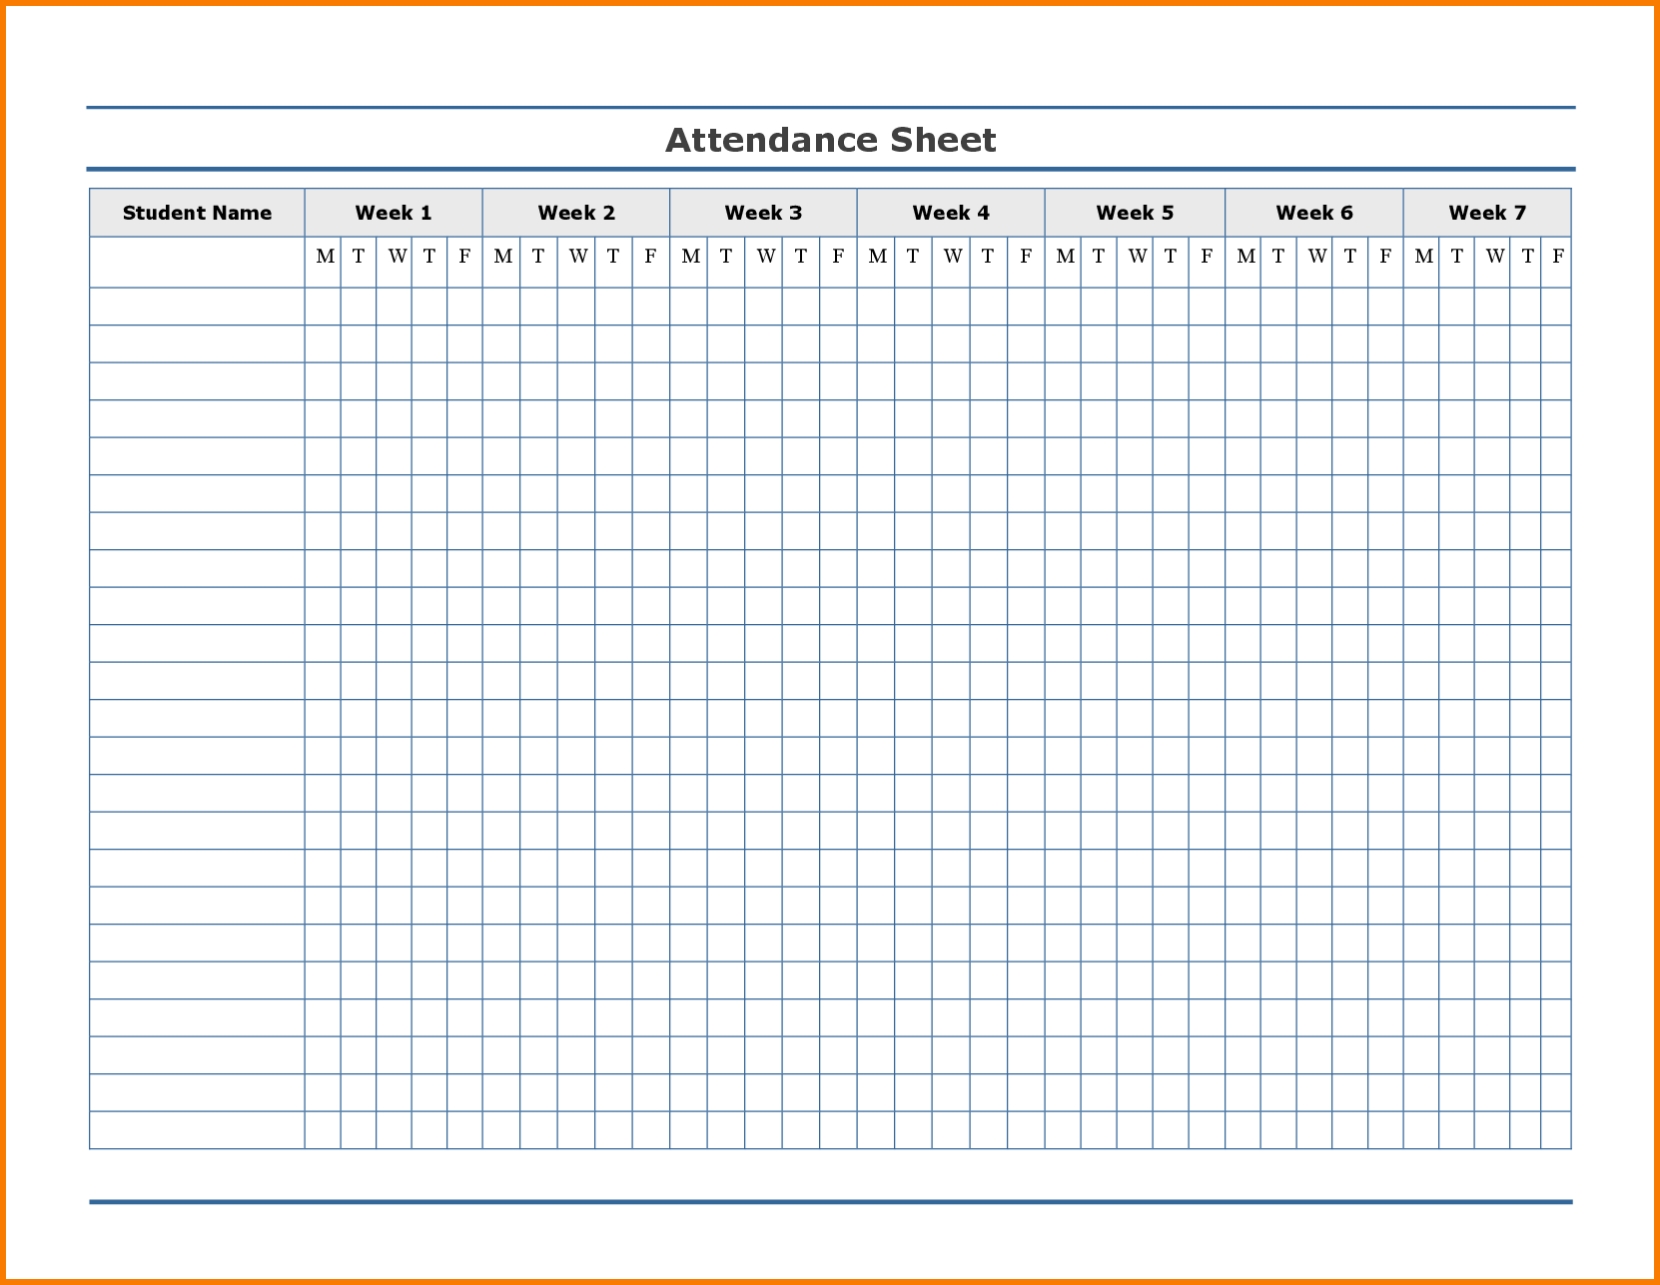 Employee Attendance Excel Sheet | Employee Attendance Sheet-Monthly Employee Attendance 2020